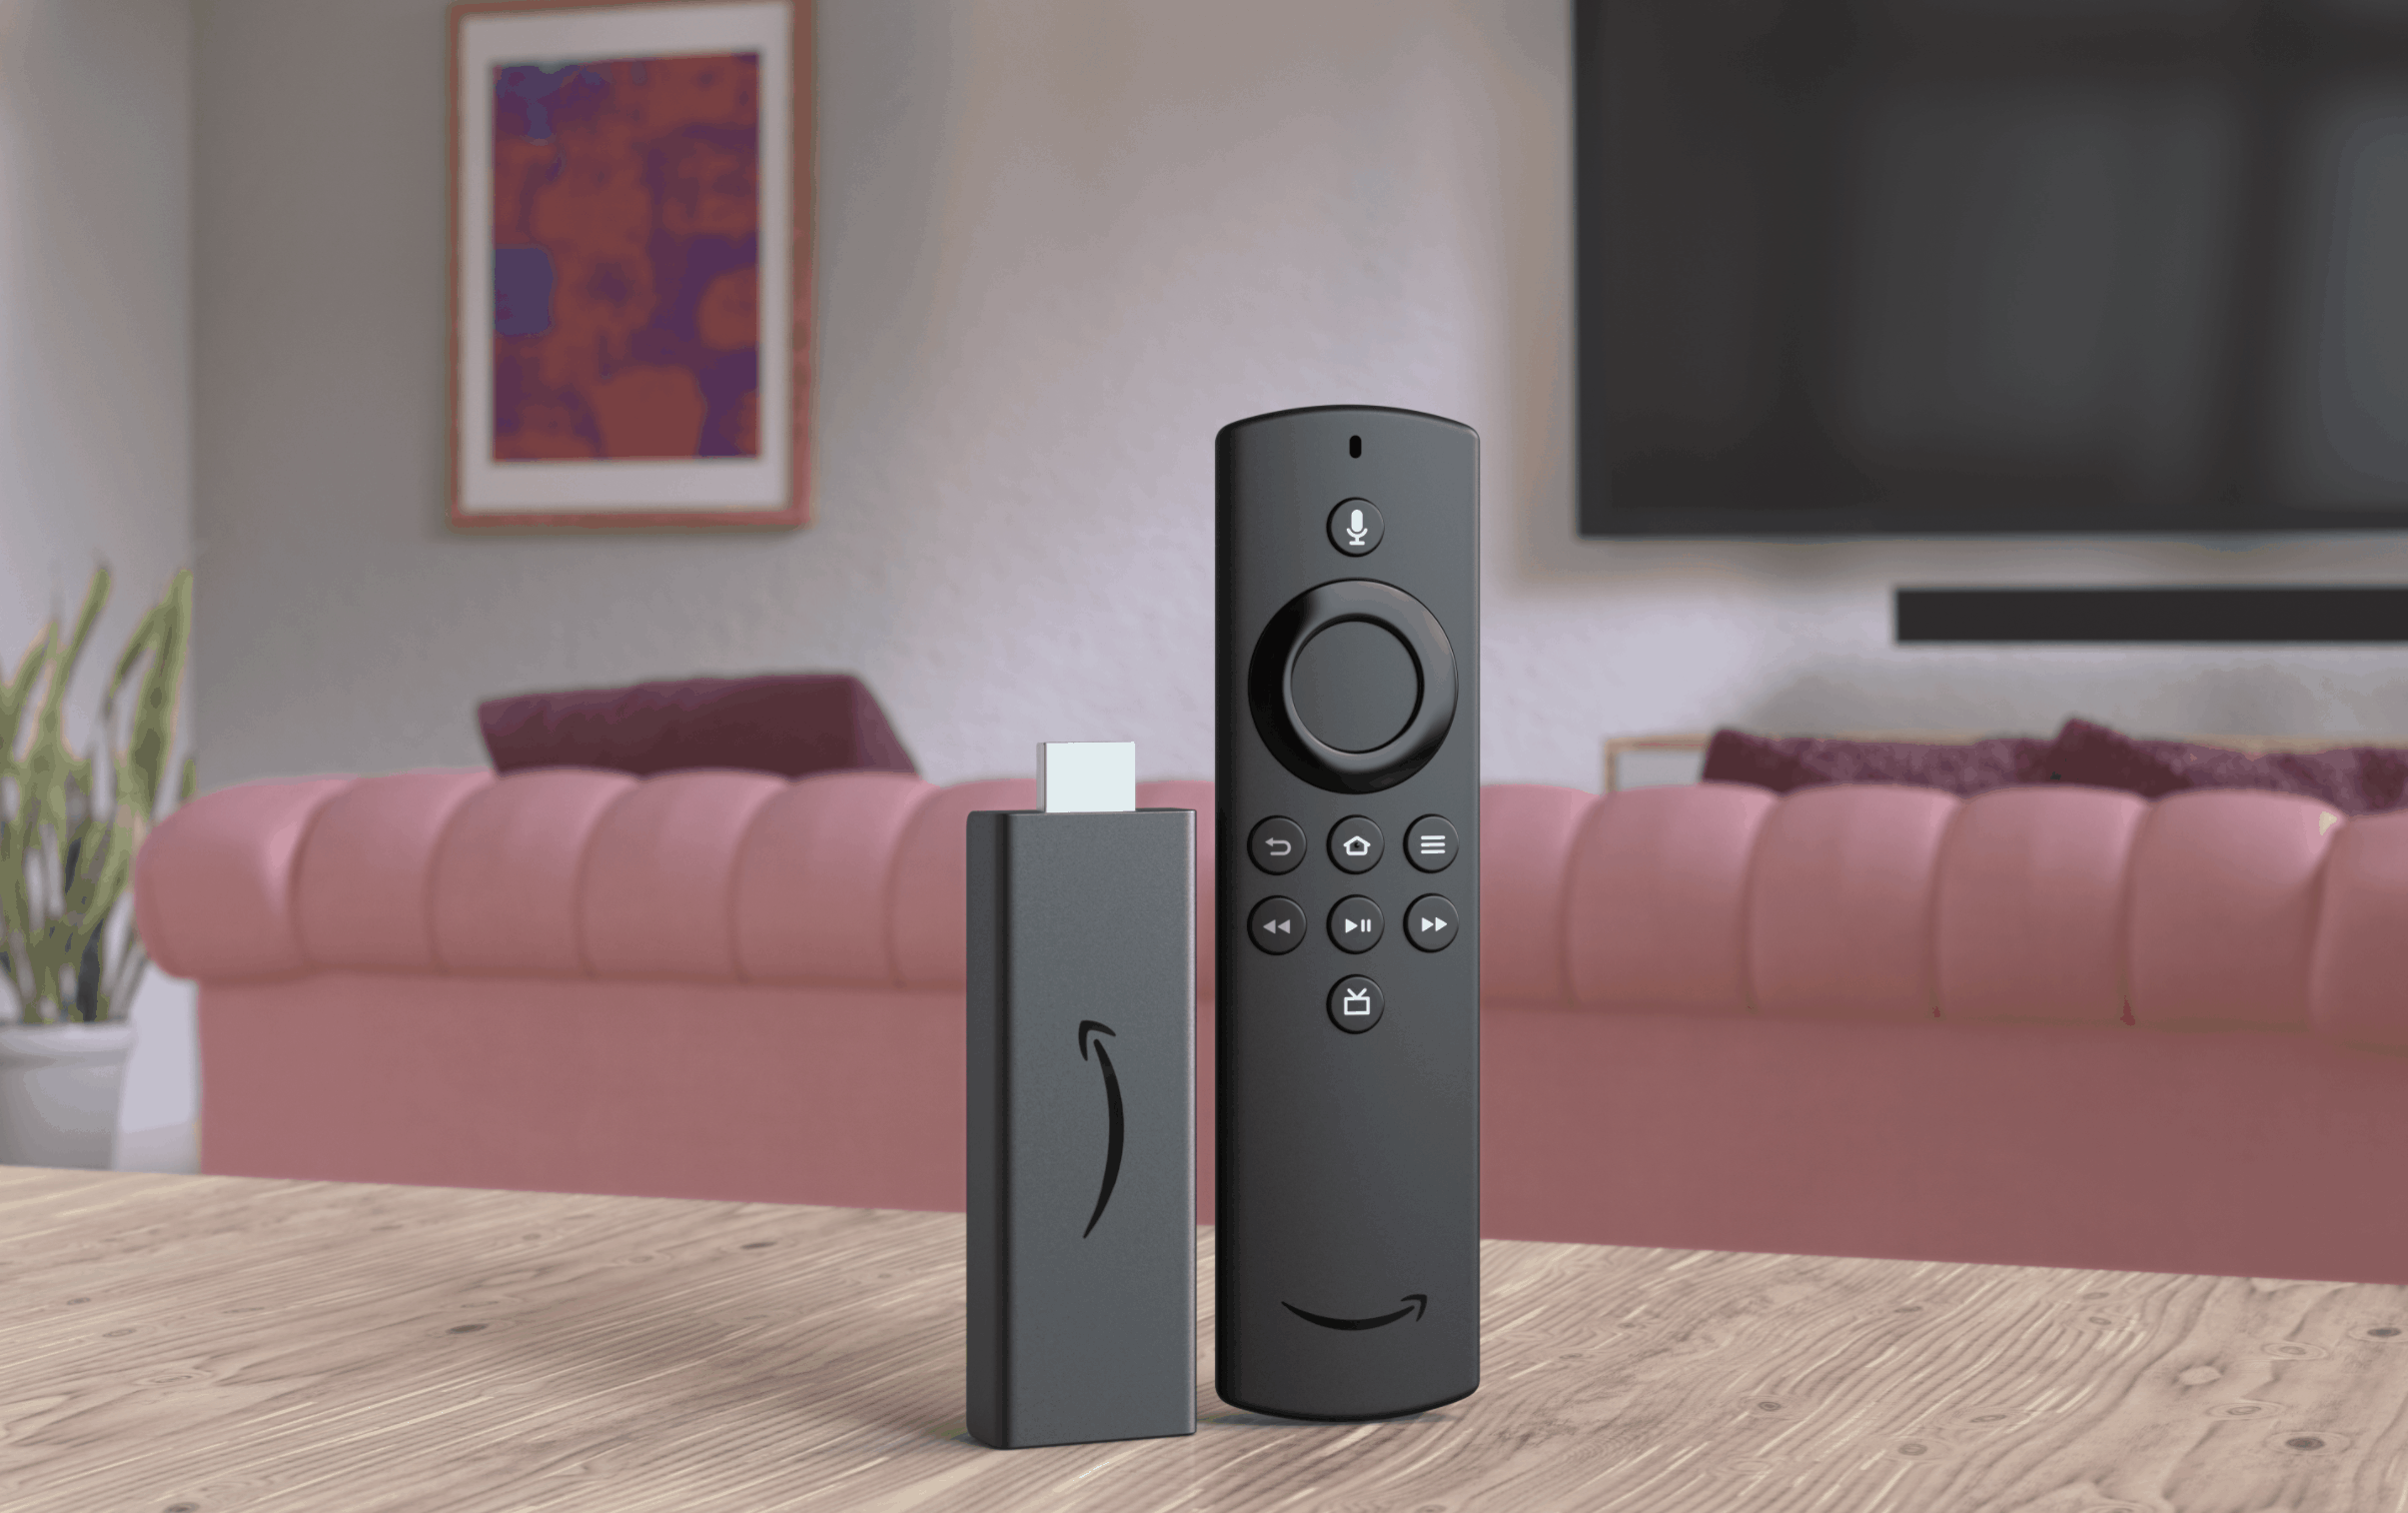 Amazon Fire TV Stick Lite